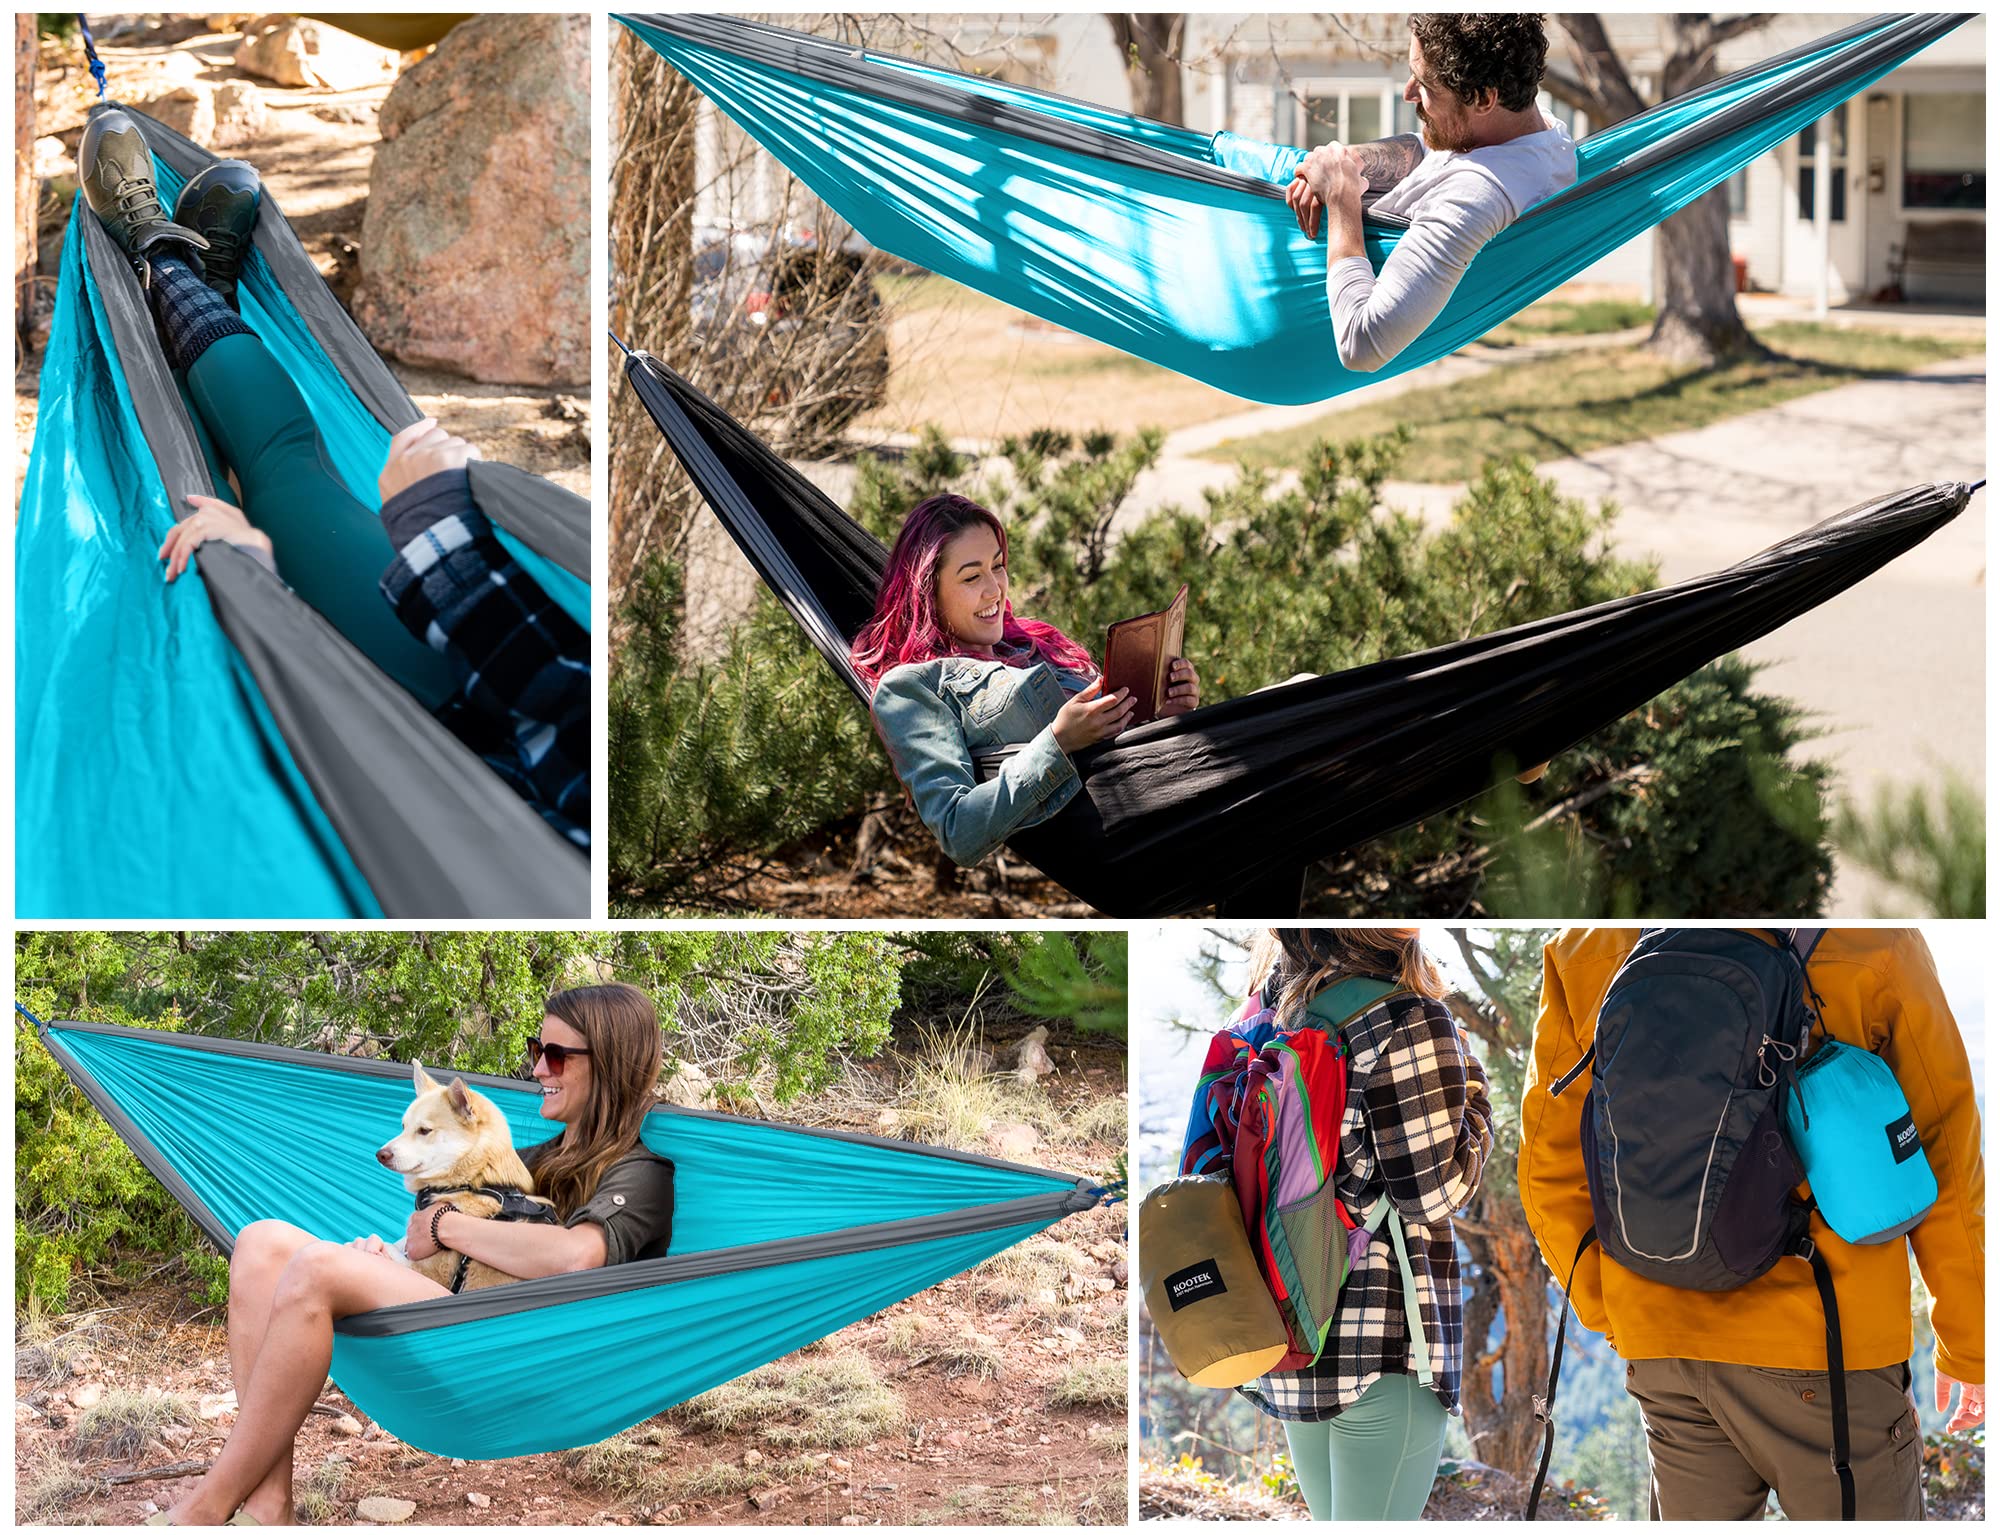 Kootek Camping Hammock Double & Single Portable Hammocks Camping Accessories for Outdoor, Indoor, Backpacking, Travel, Beach, Backyard, Patio, Hiking